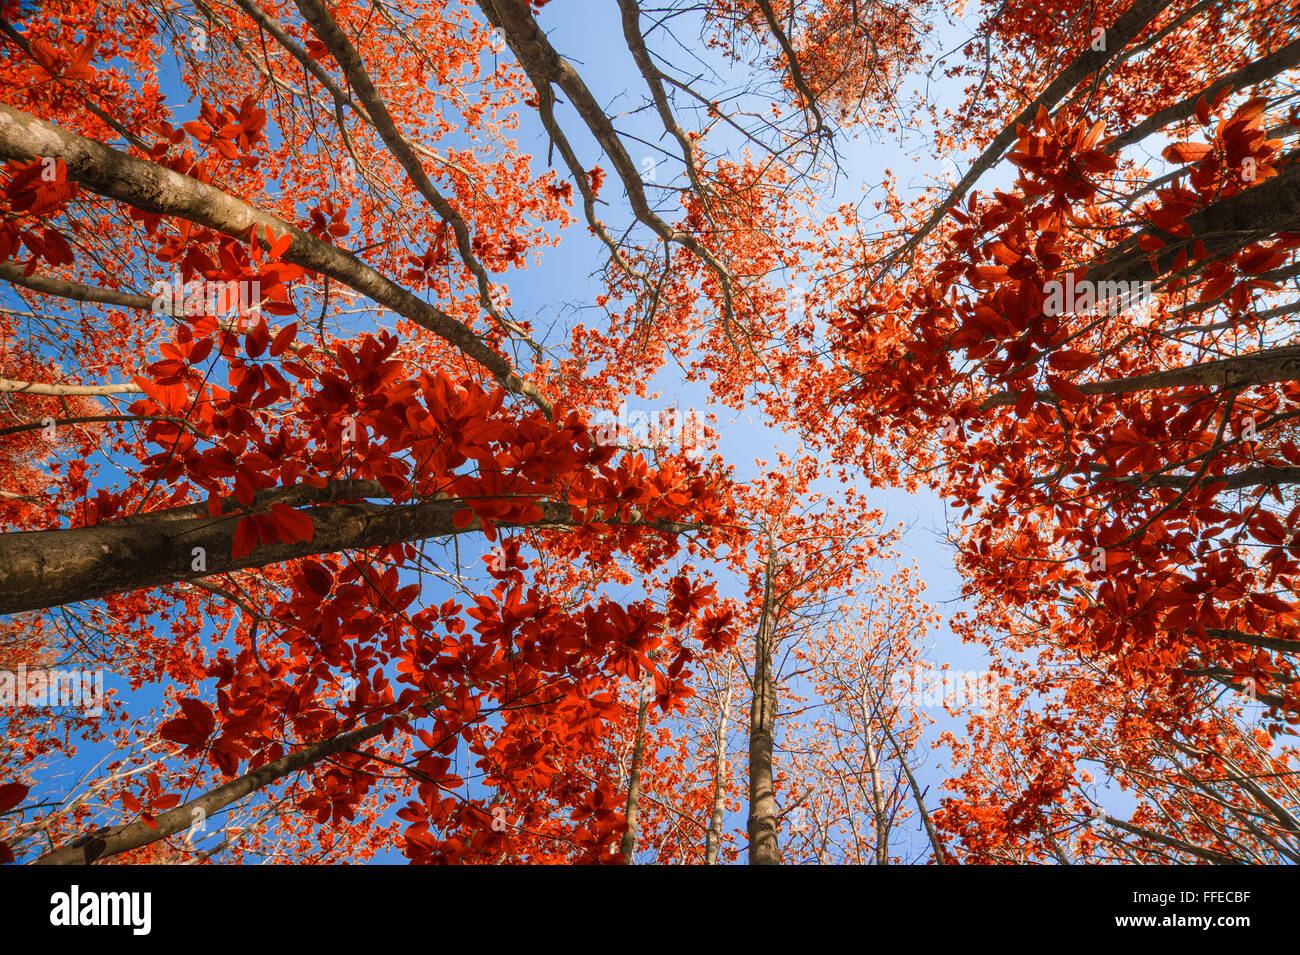 Stunning Autumn Fall landscape image looking up through beech trees Stock Photo